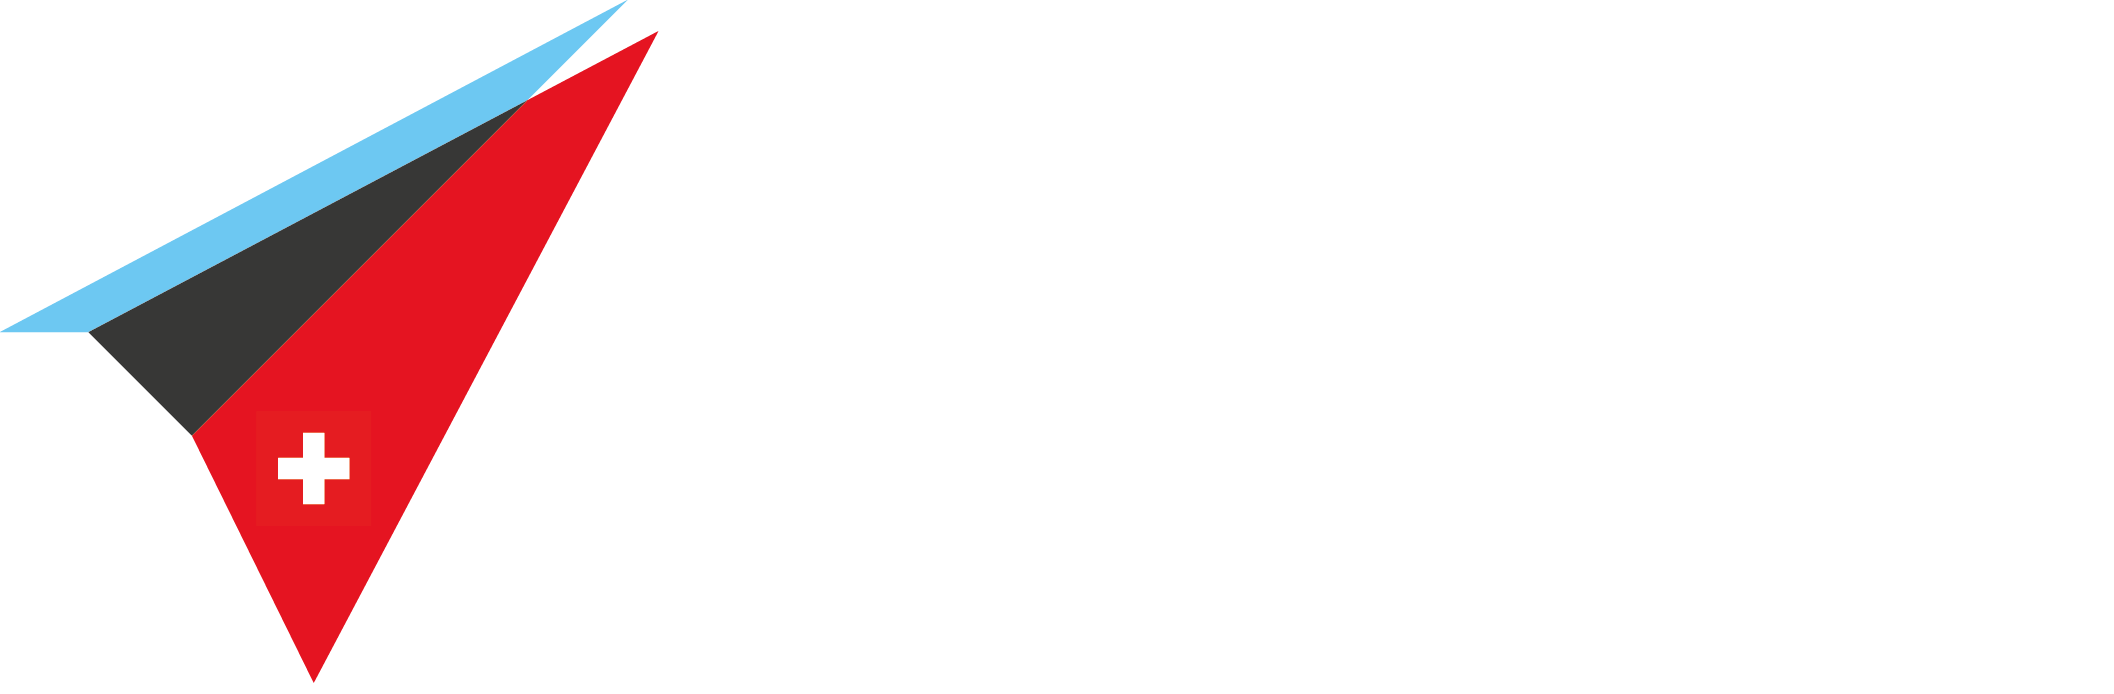 GAIN - Your aerospace partner from western Switzerland